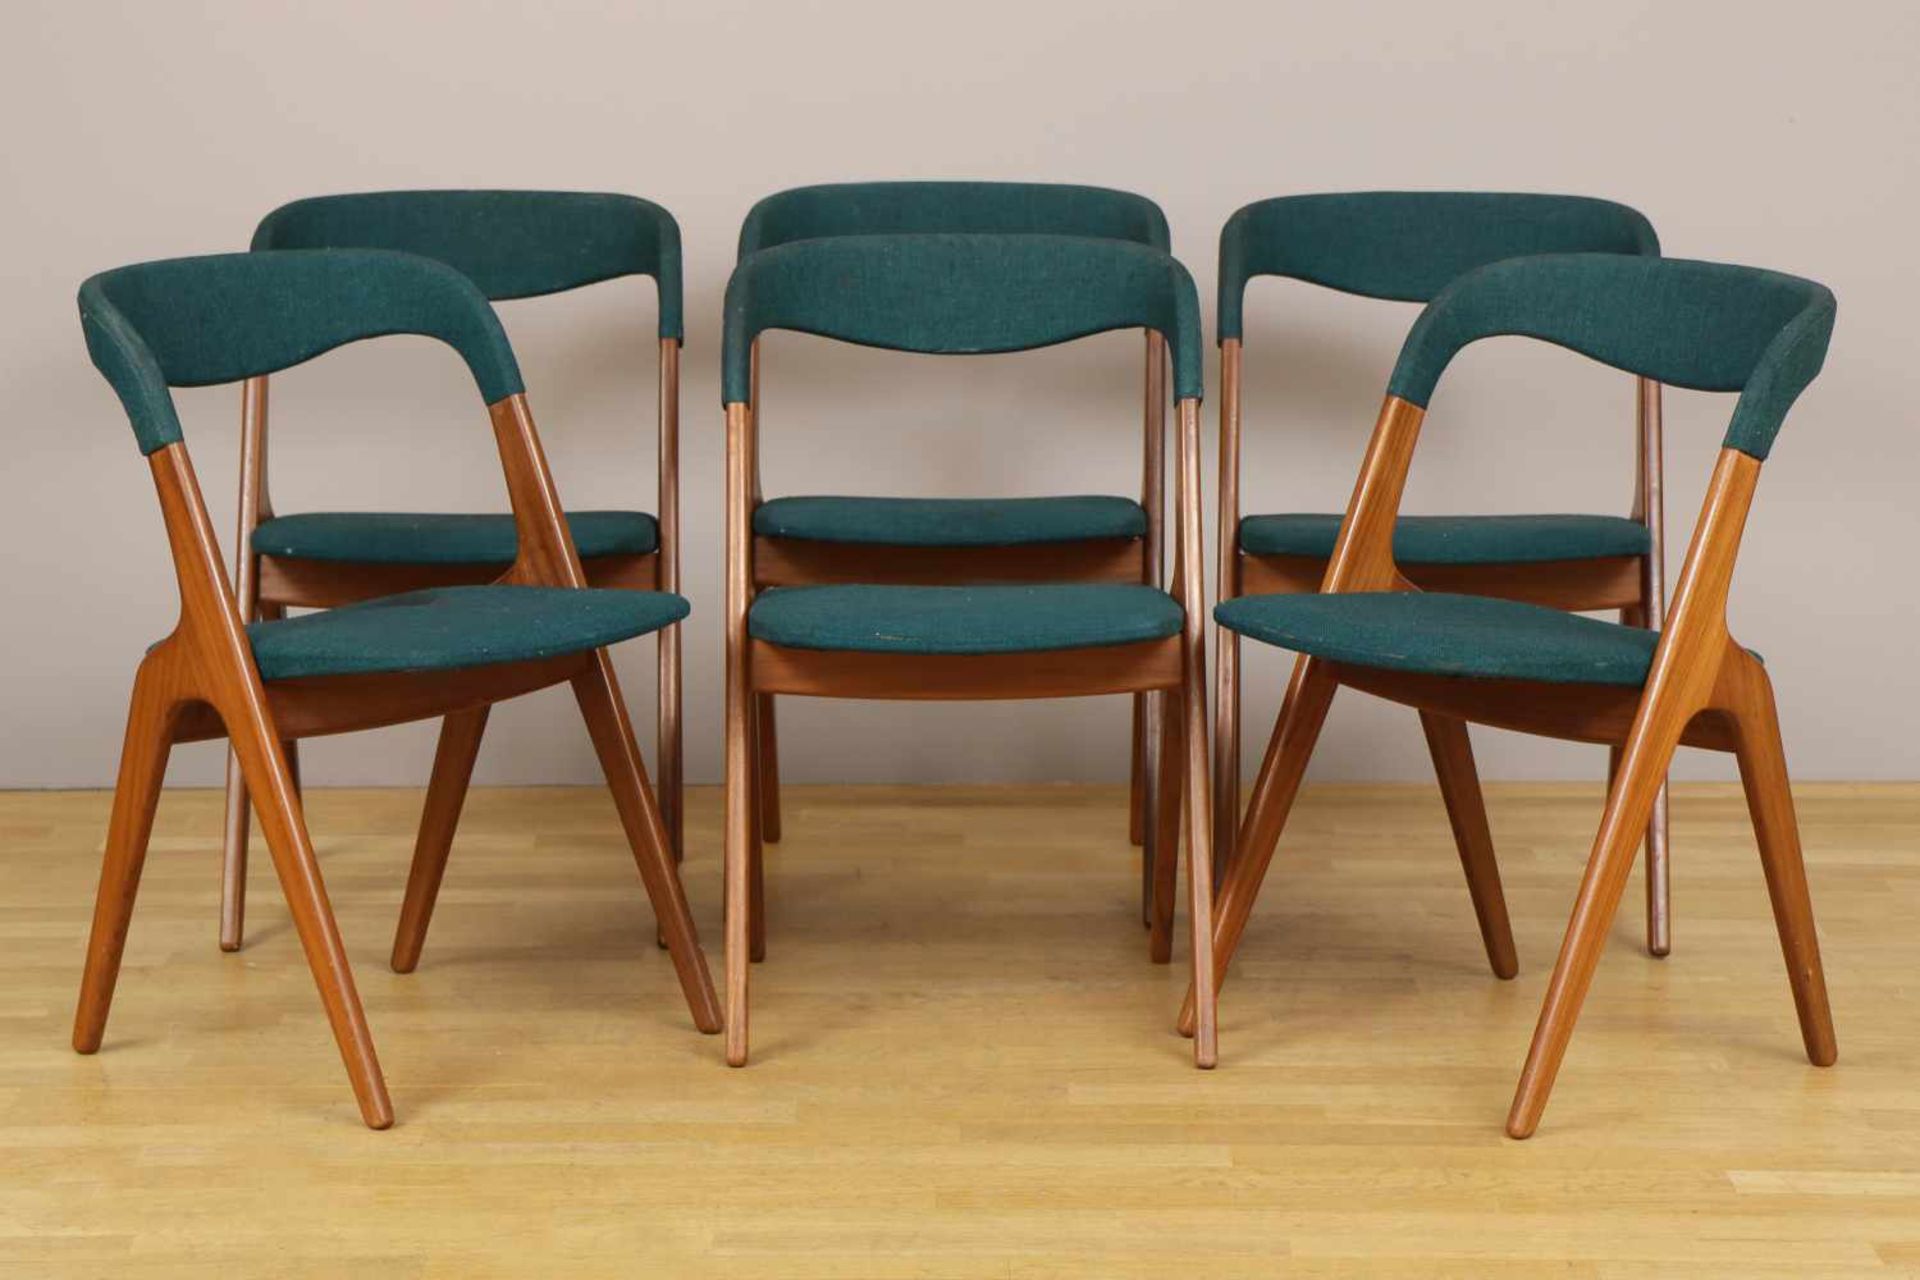 6 Stühle VAMO Sonderborg Teakholz, Dänemark, um 1960-70, petrolfarbener Hopsak-Bezug, am Stand